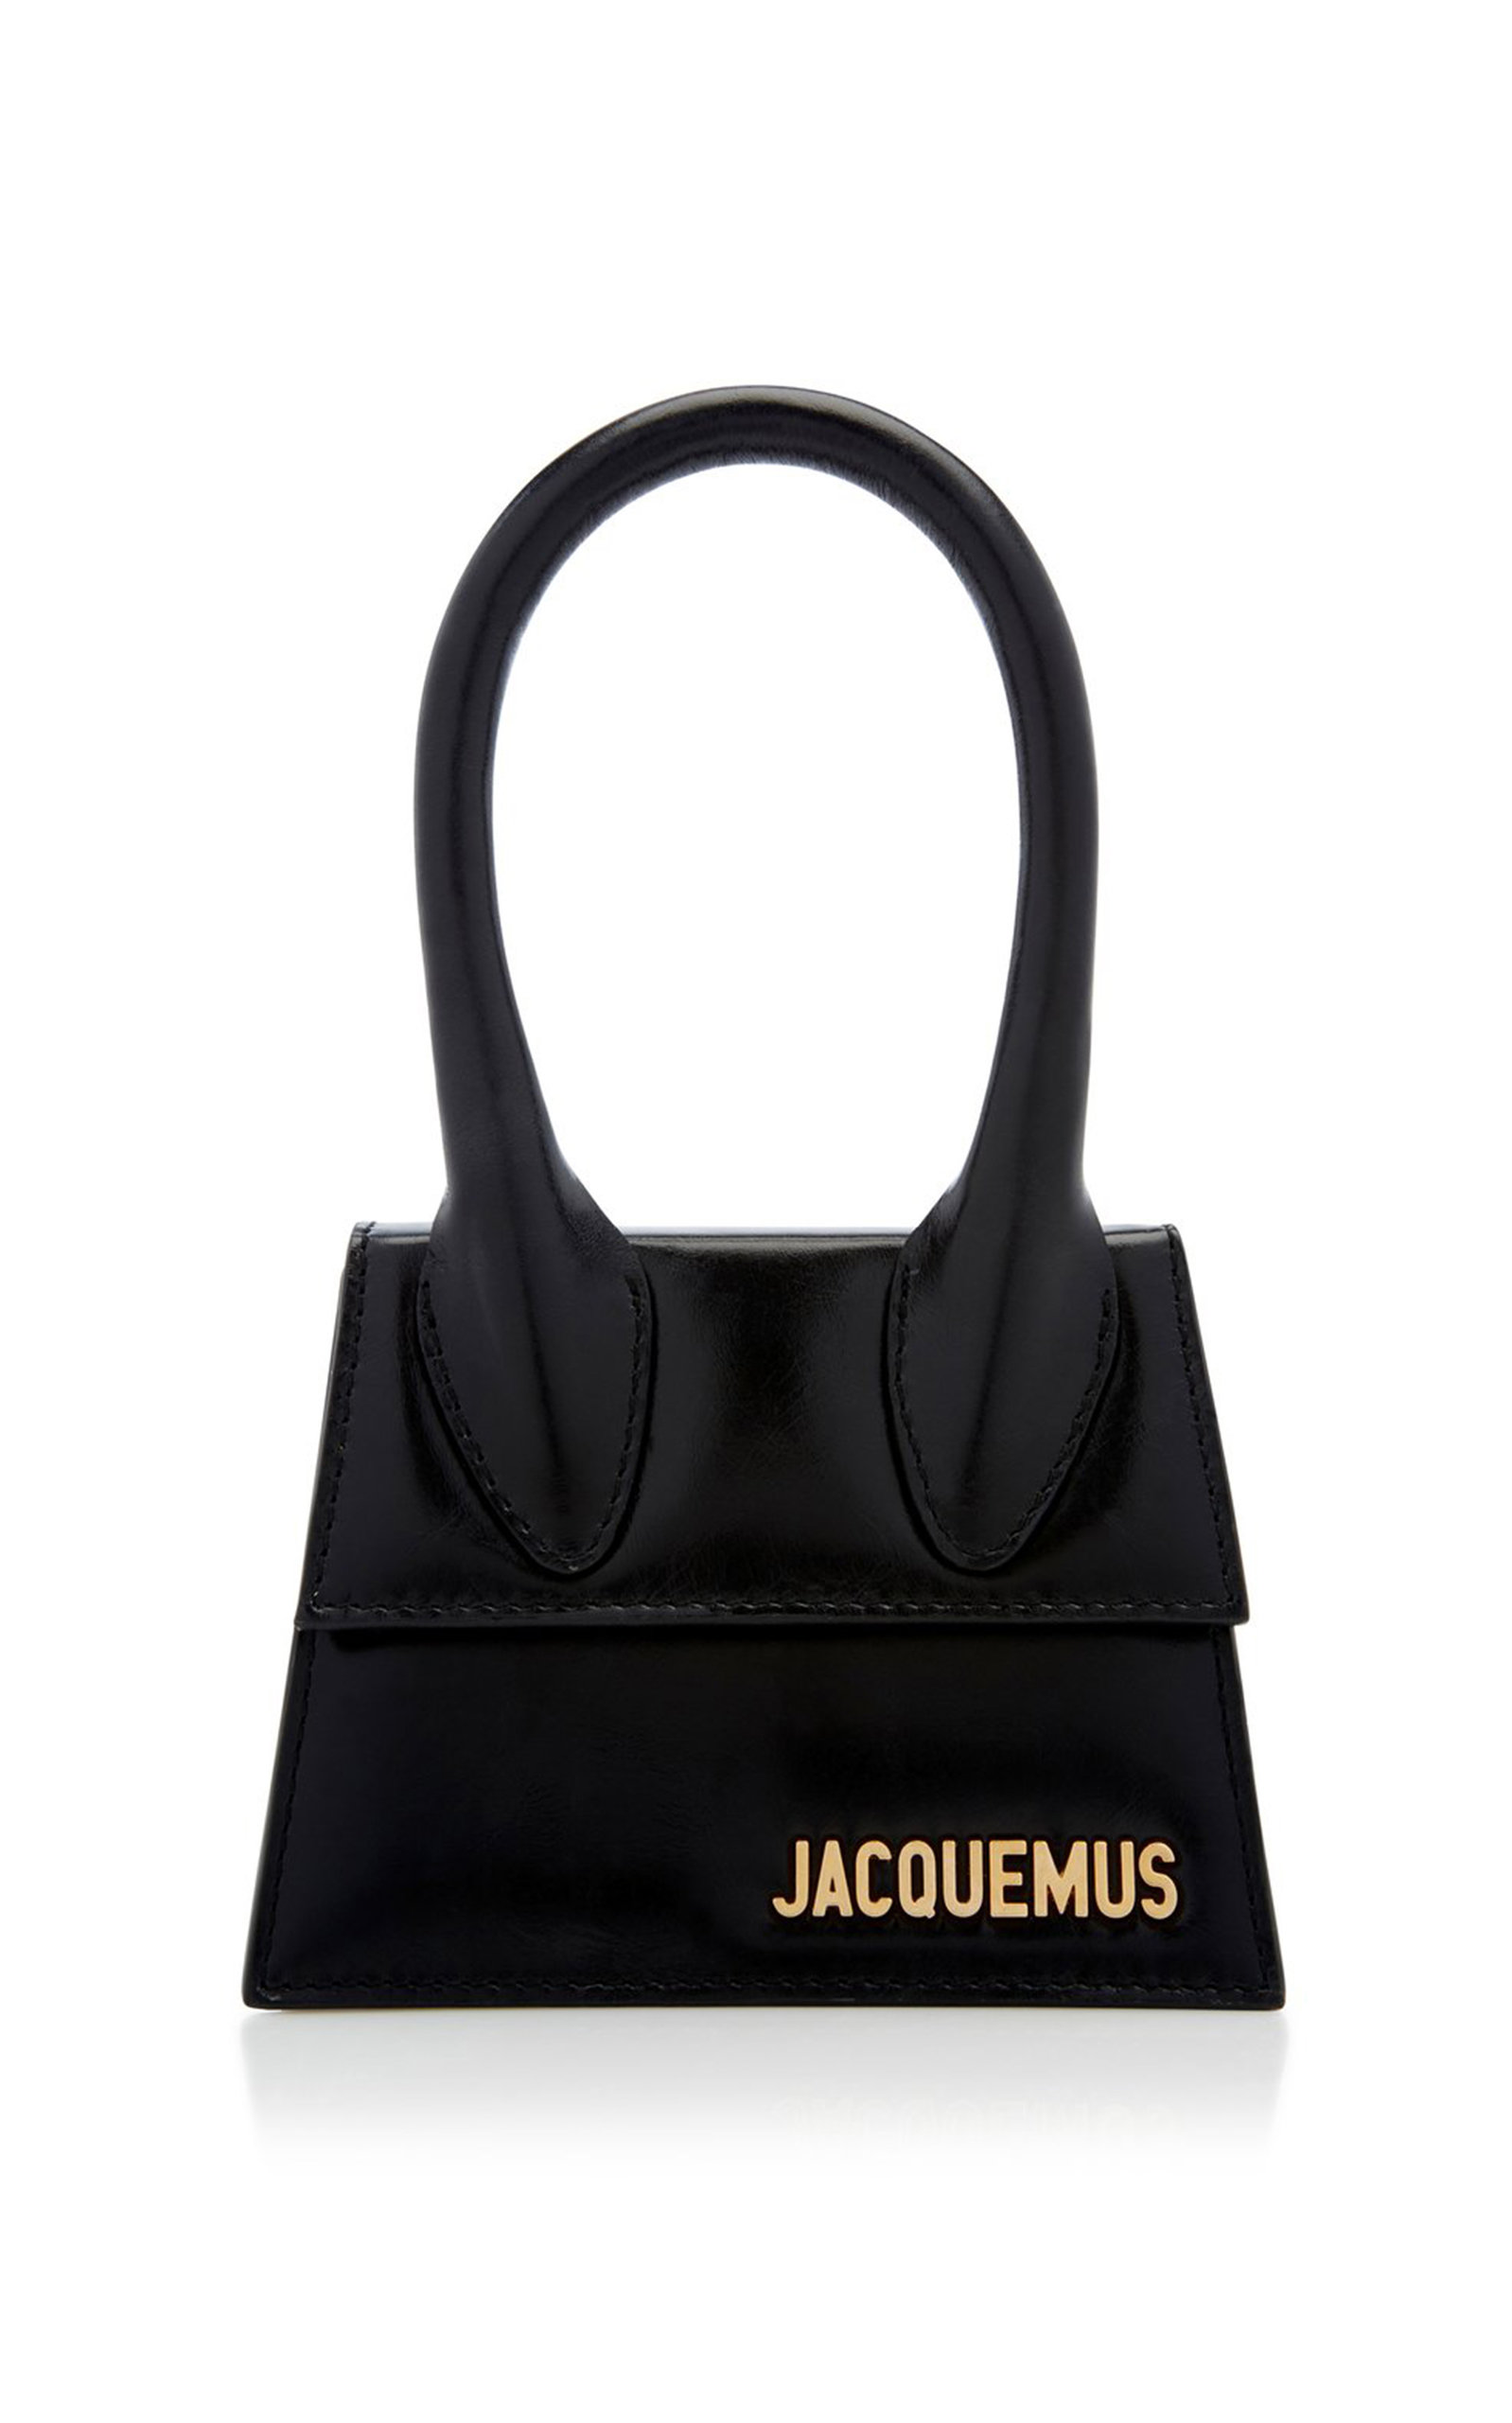 Jacquemus сумка оригинал